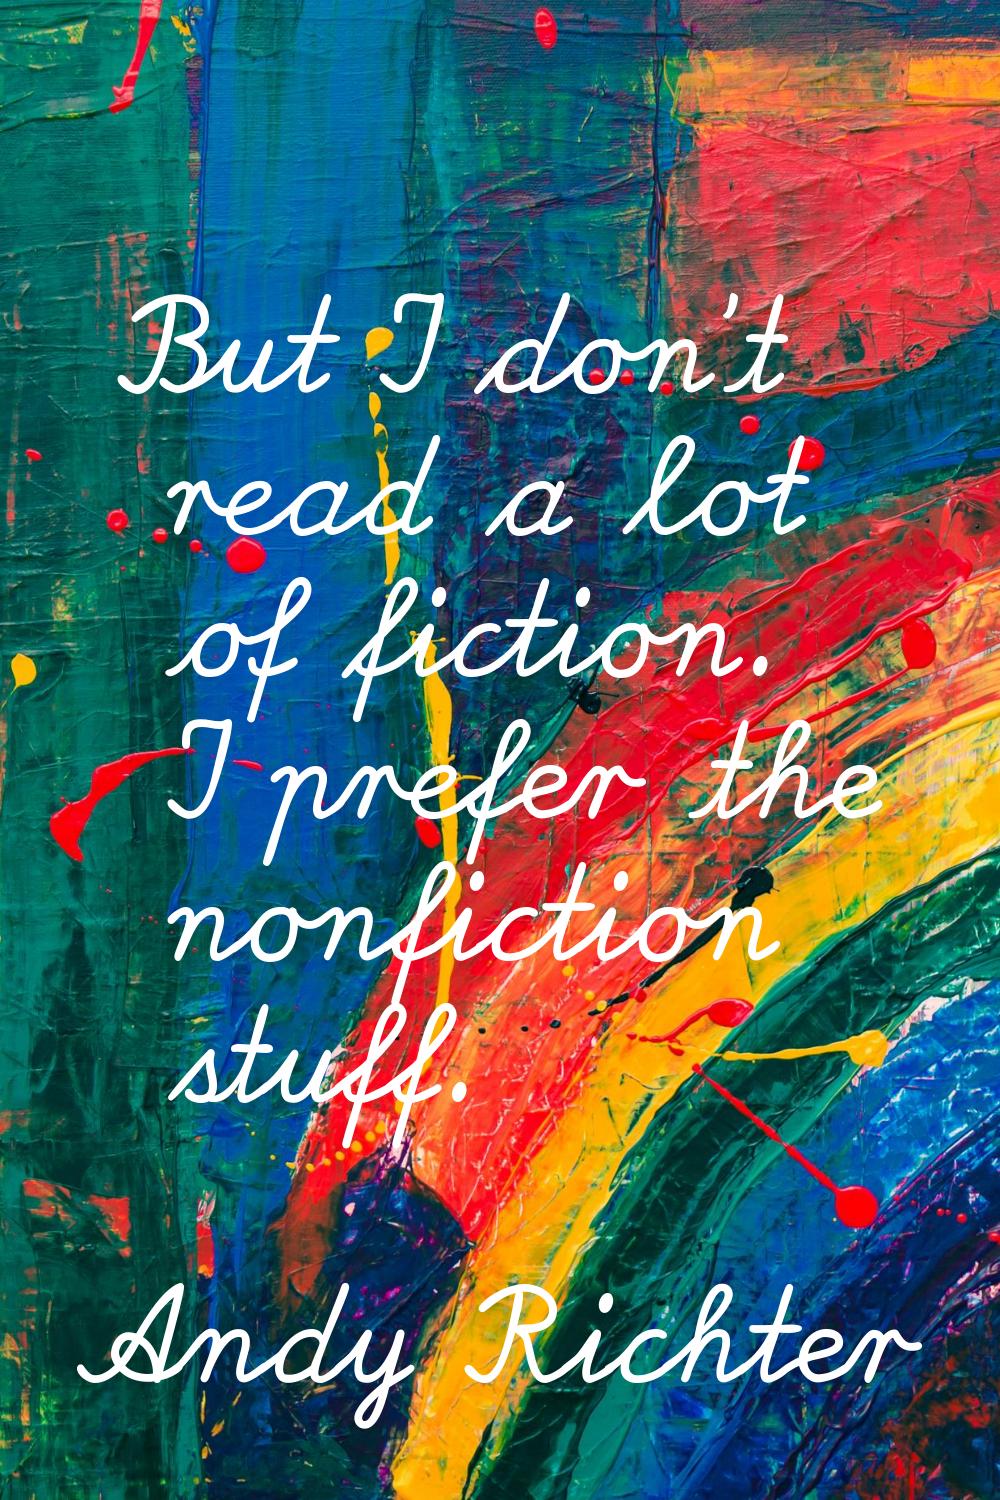 But I don't read a lot of fiction. I prefer the nonfiction stuff.